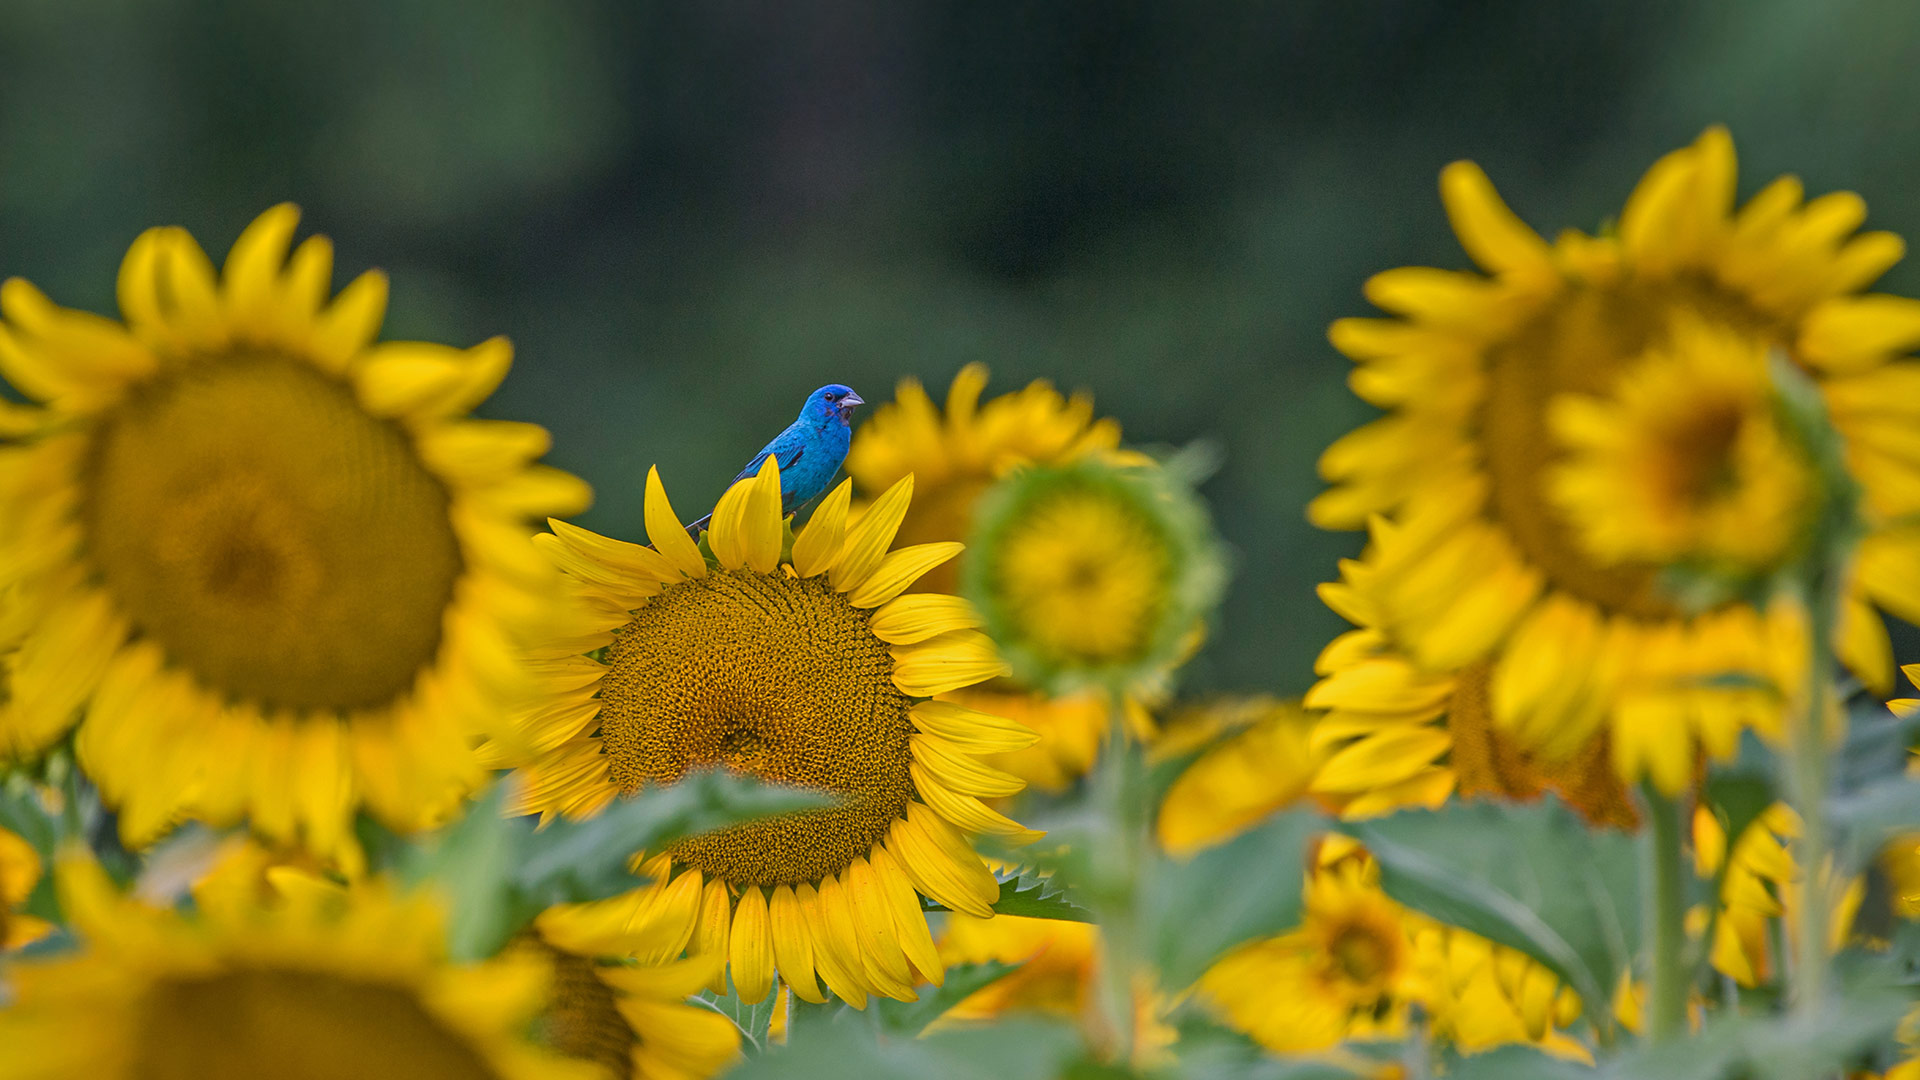 An indigo bunting on a sunflower - William Krumpelman/Getty Images)